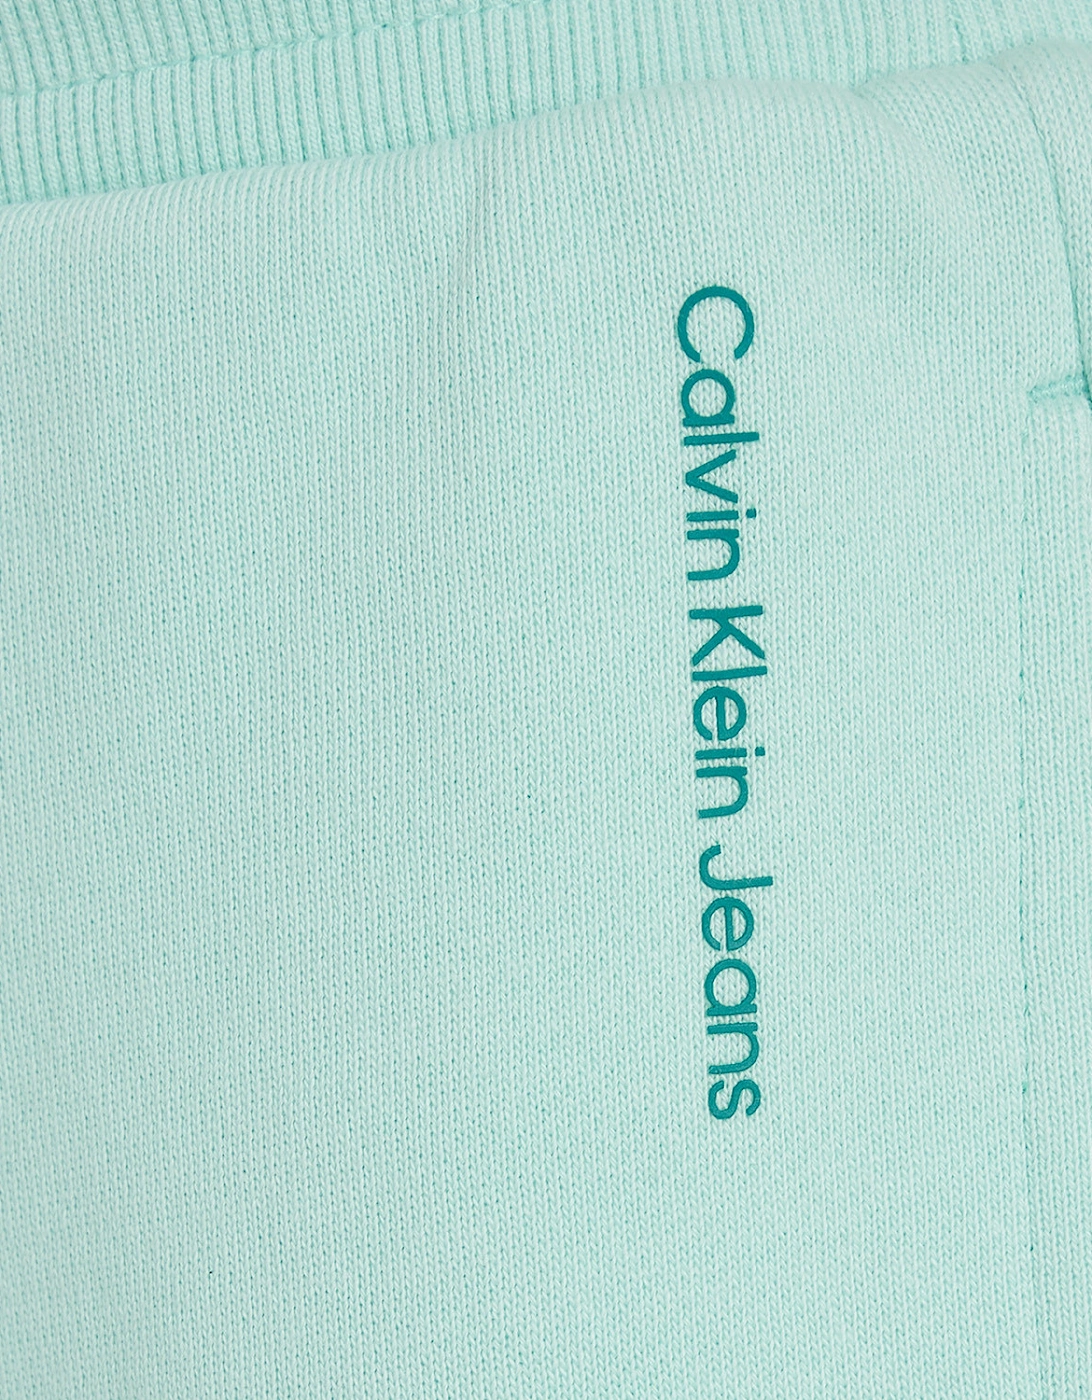 Juniors Minimalistic Shorts (Turquoise)